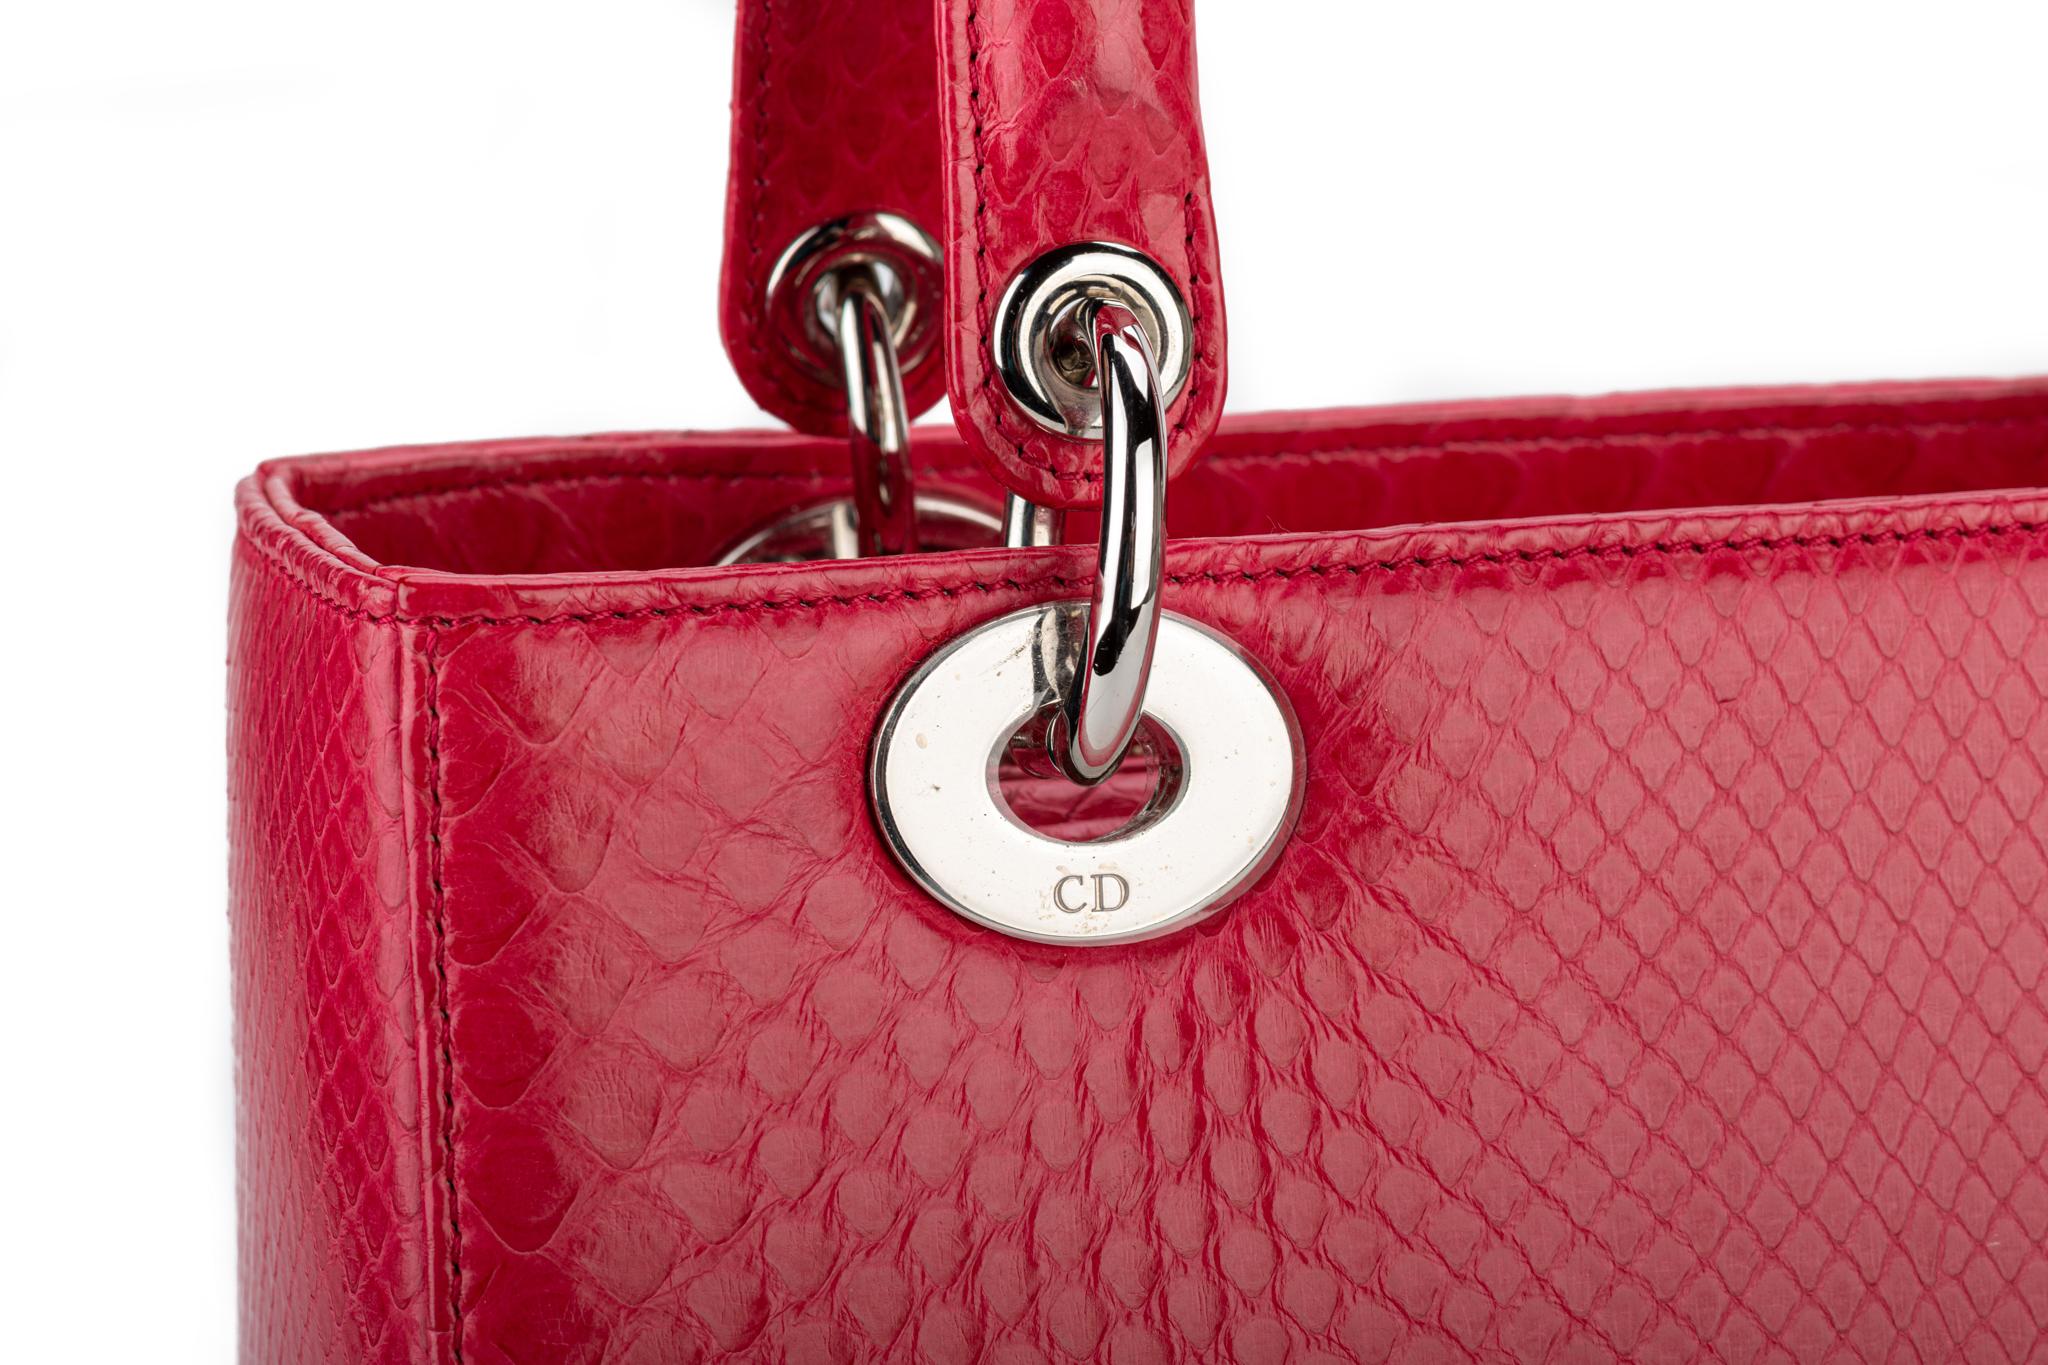  Grand sac en python rouge Lady Dior en vente 6